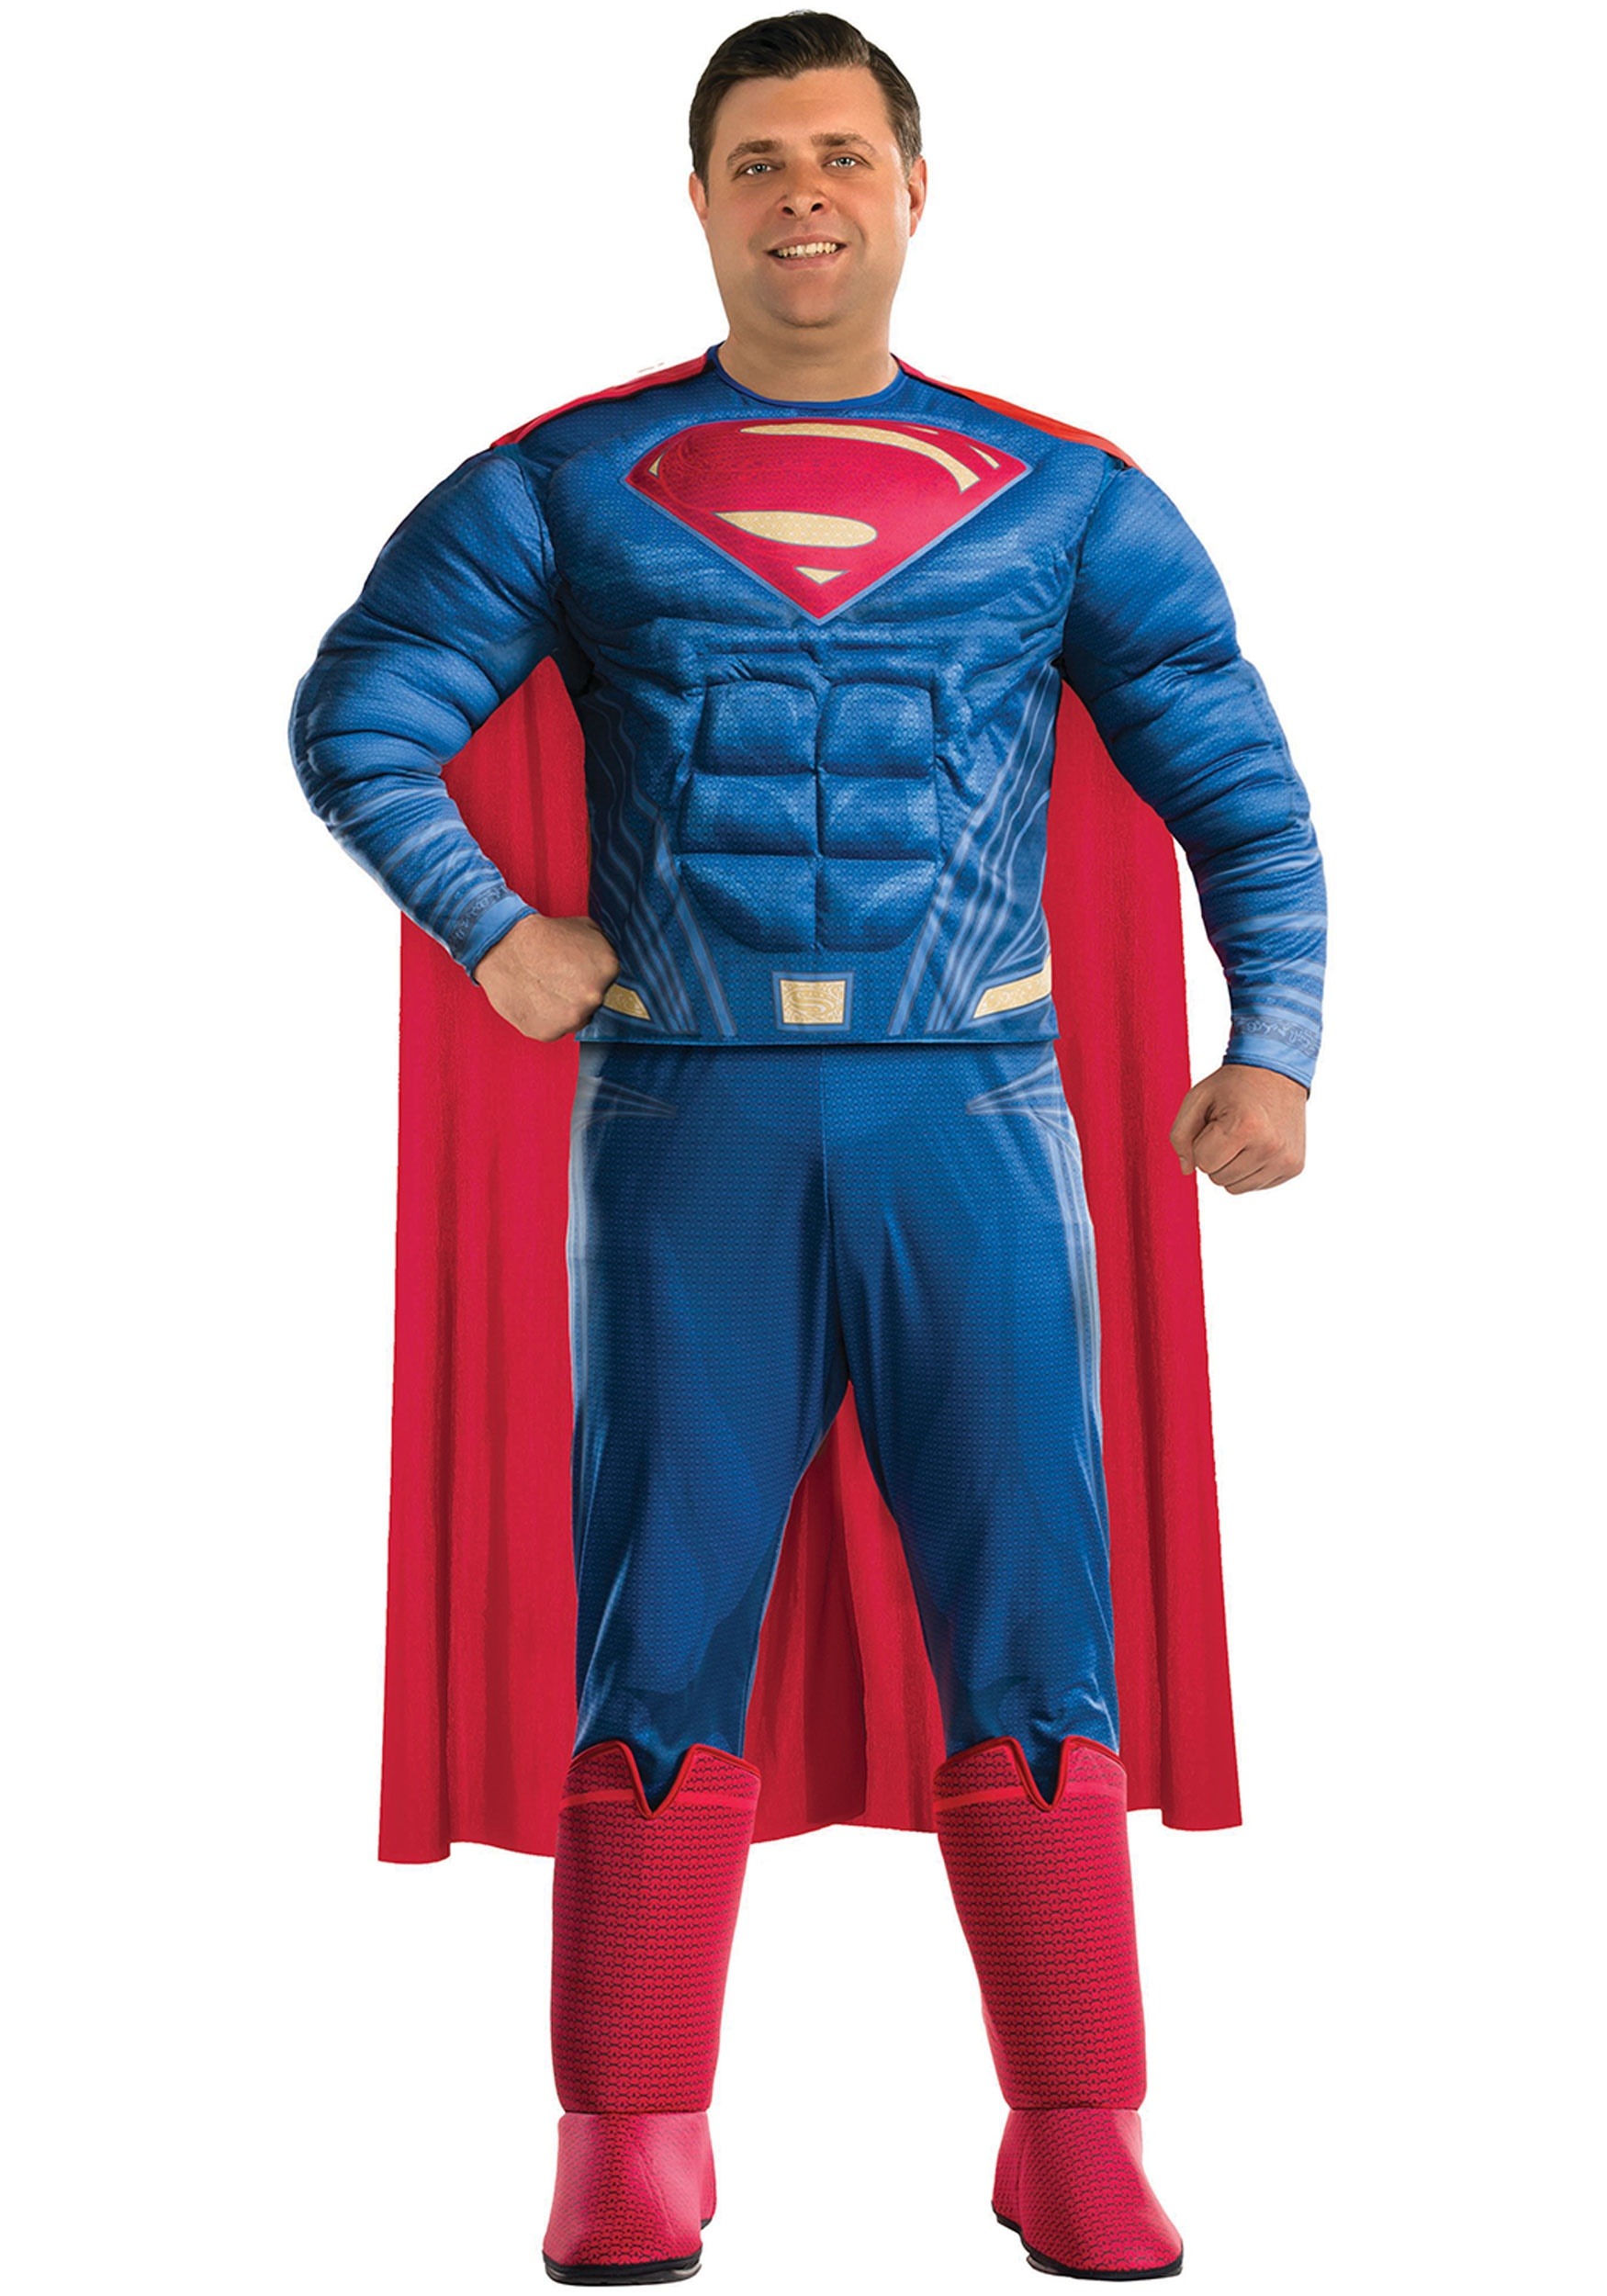 Plus Size Adult Superman Costume